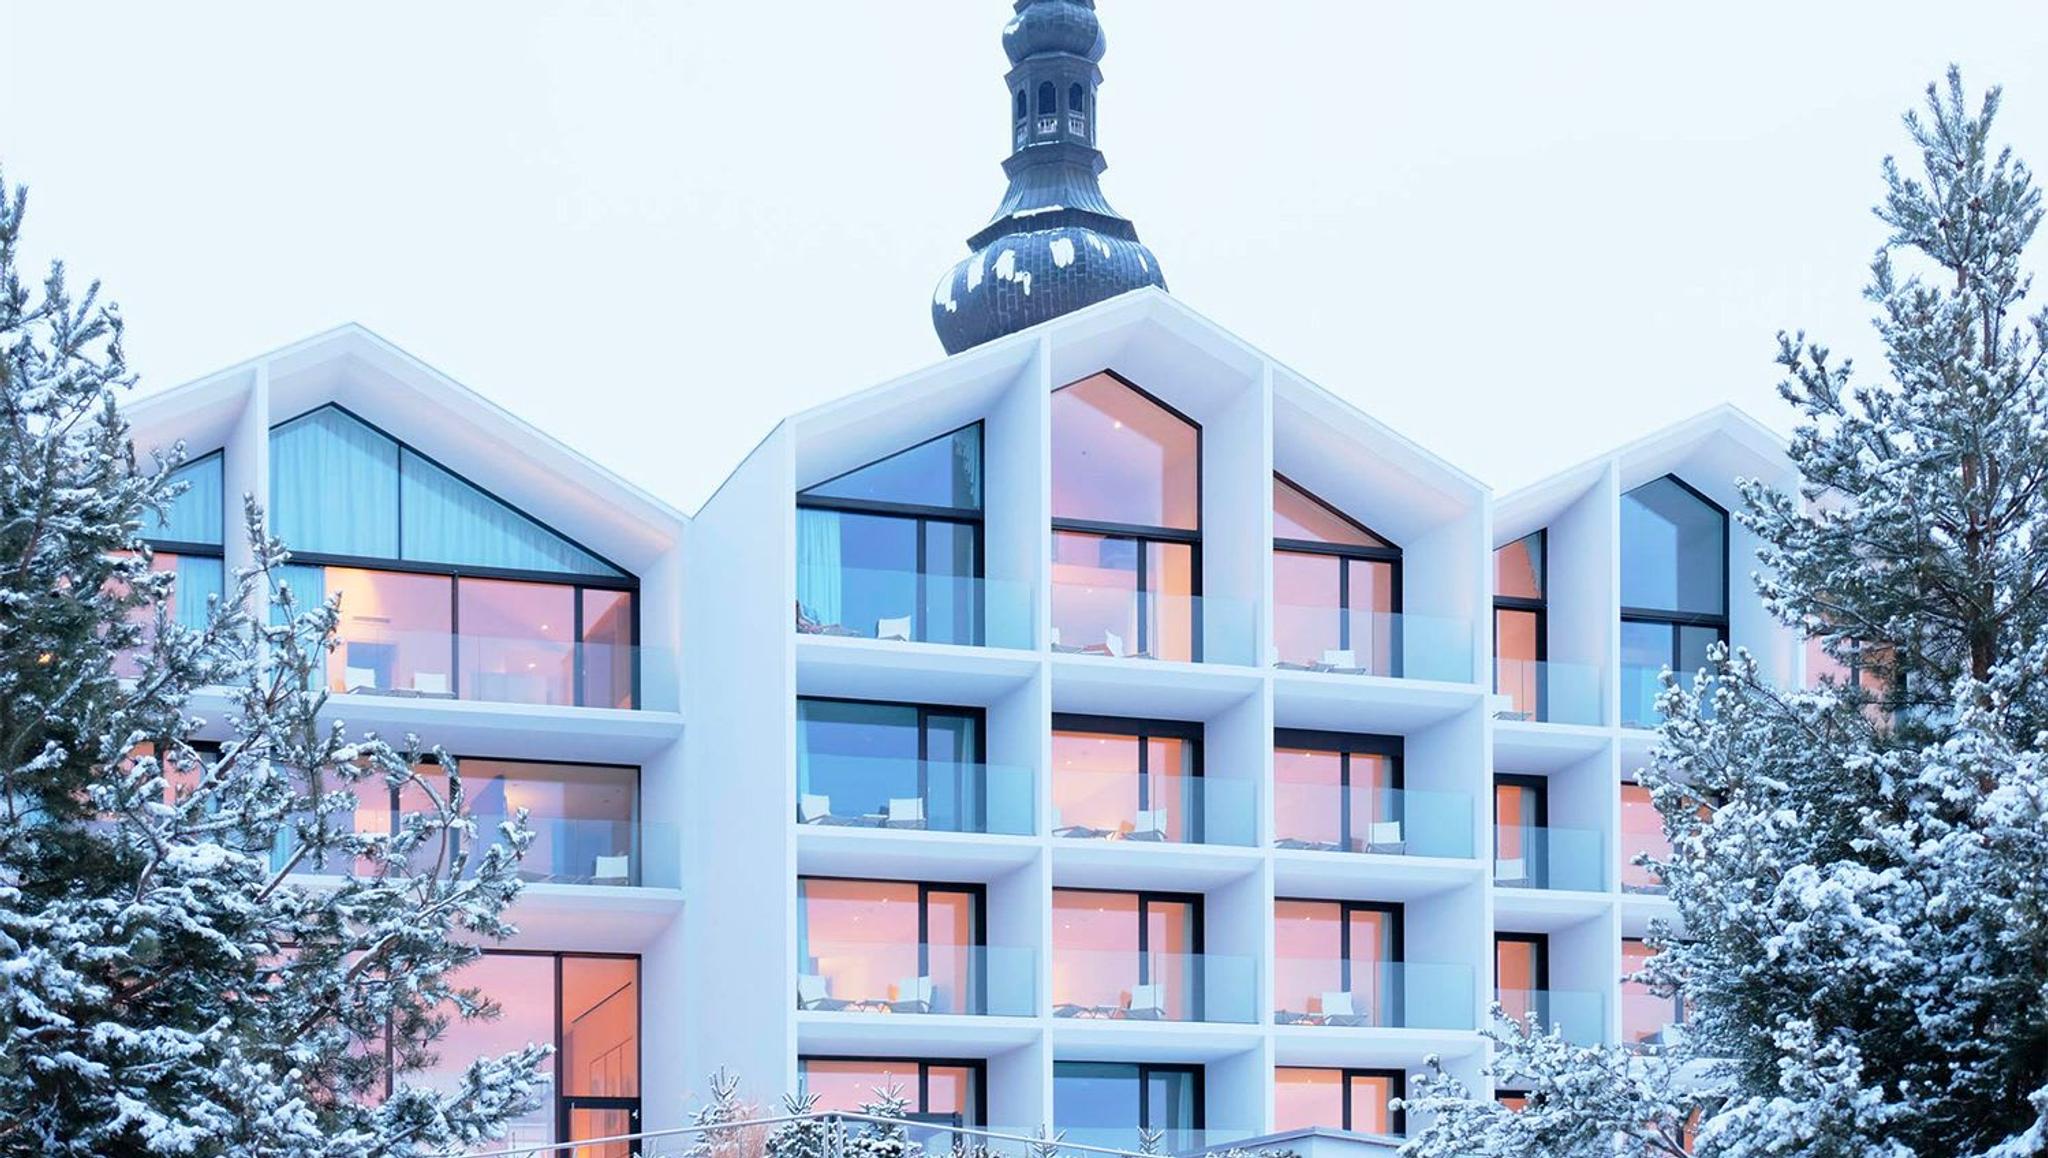 Schgaguler Hotel: Essential Design in the Alps